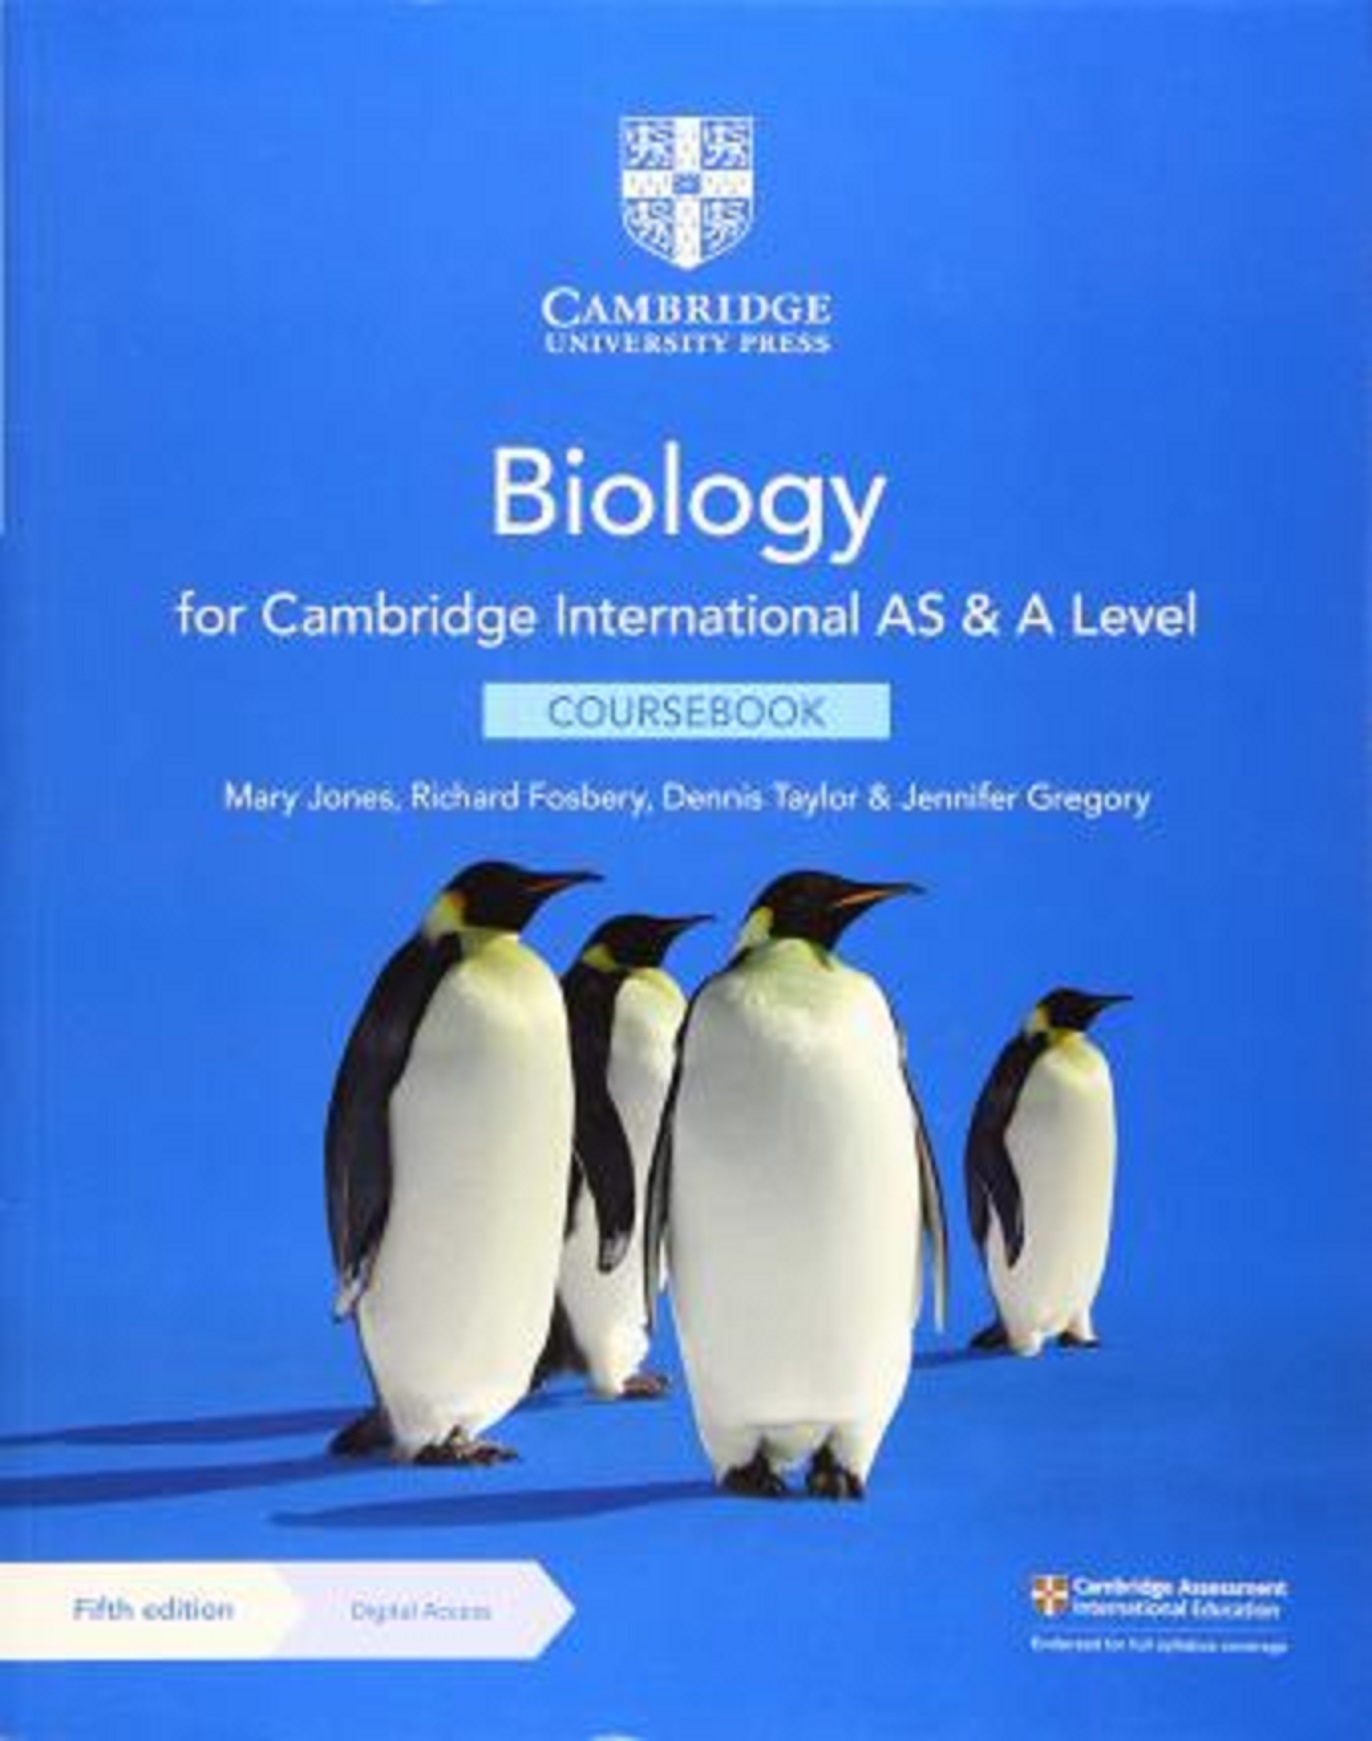 biology phd cambridge